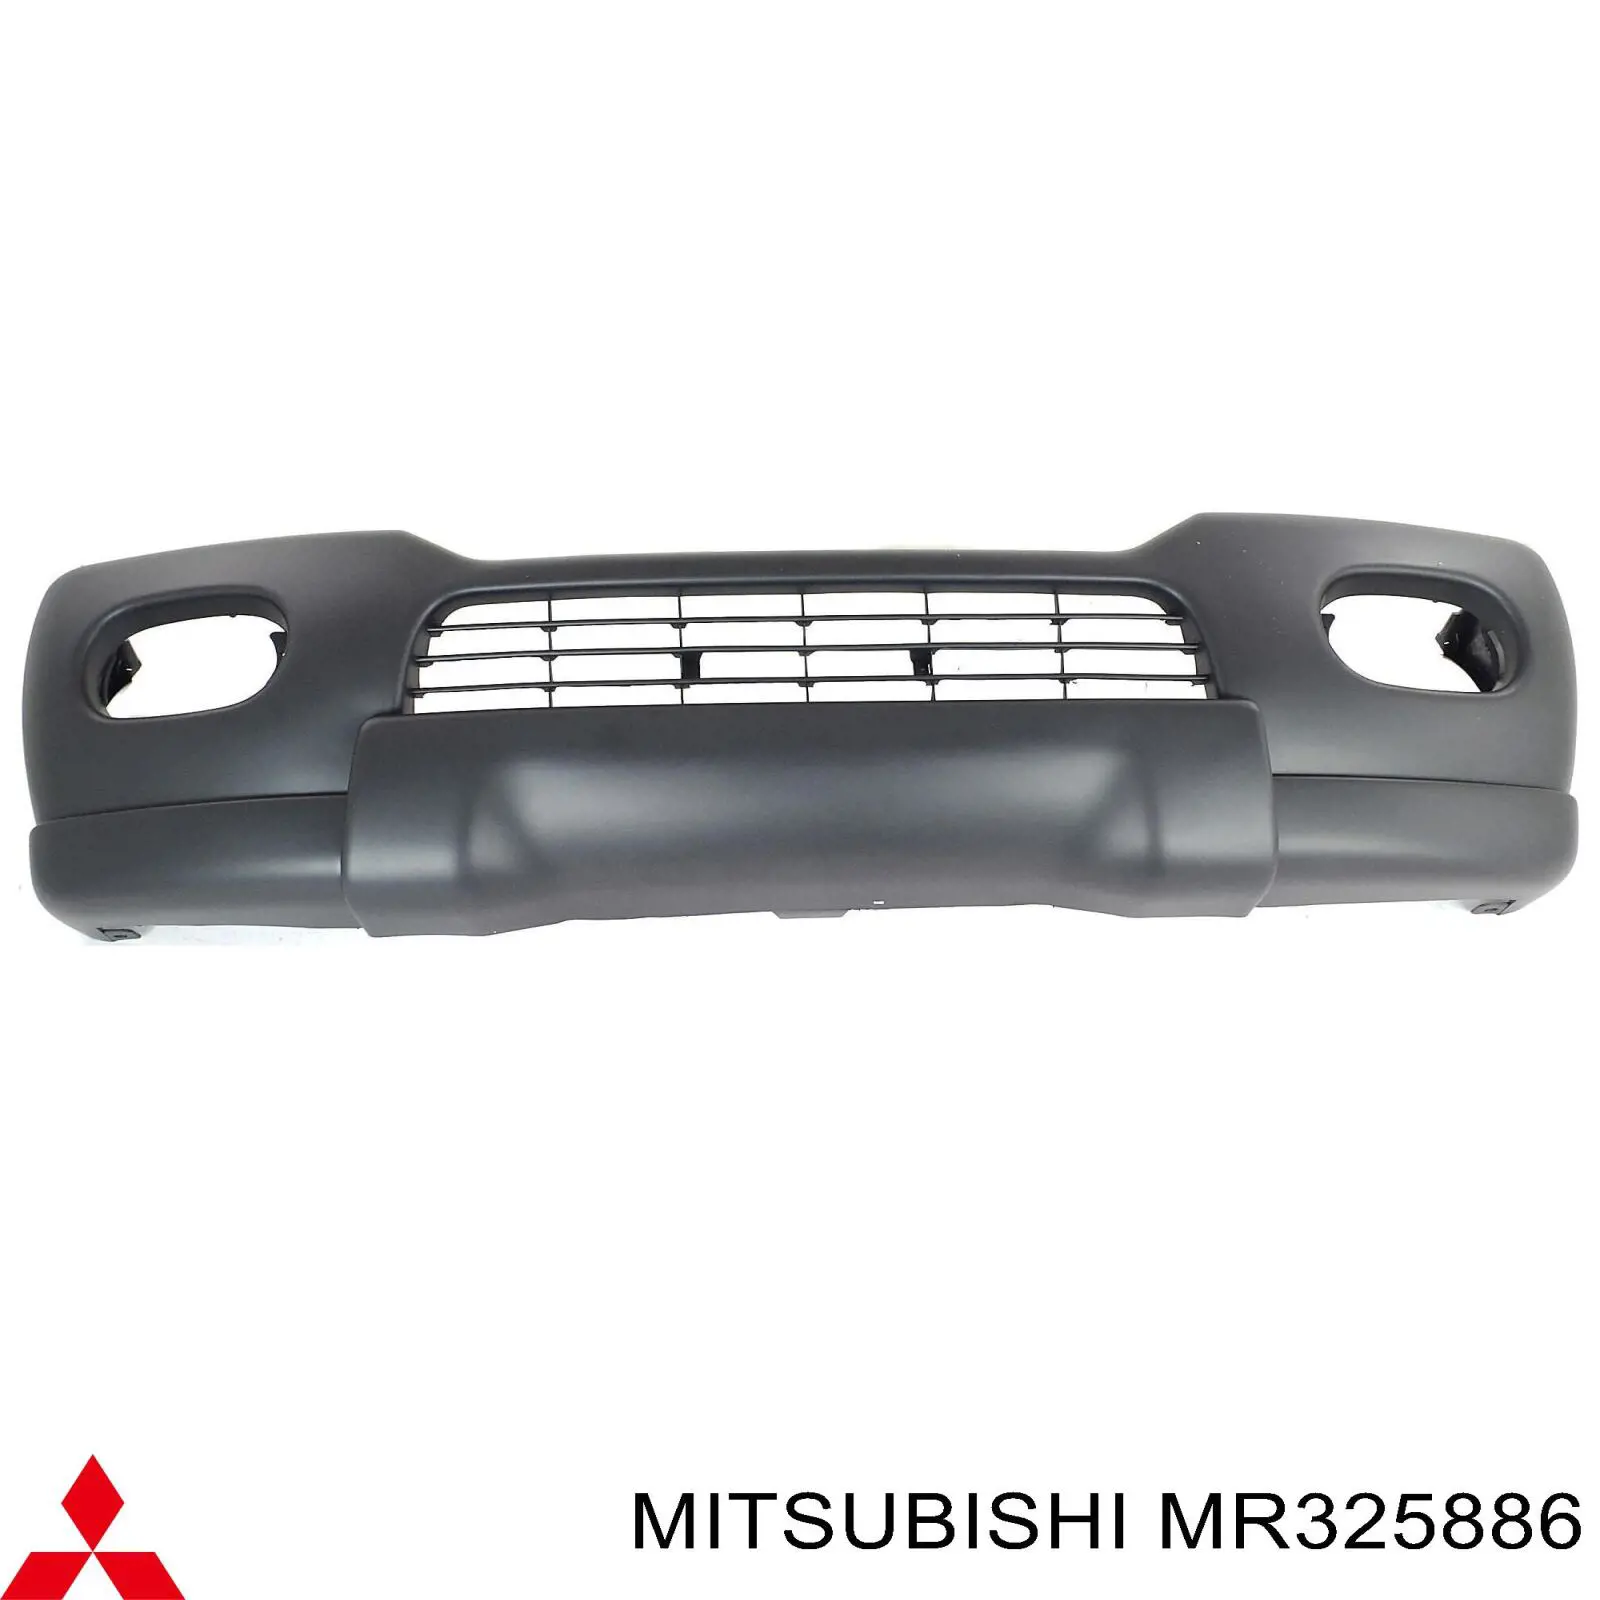 MR325886 Mitsubishi paragolpes delantero